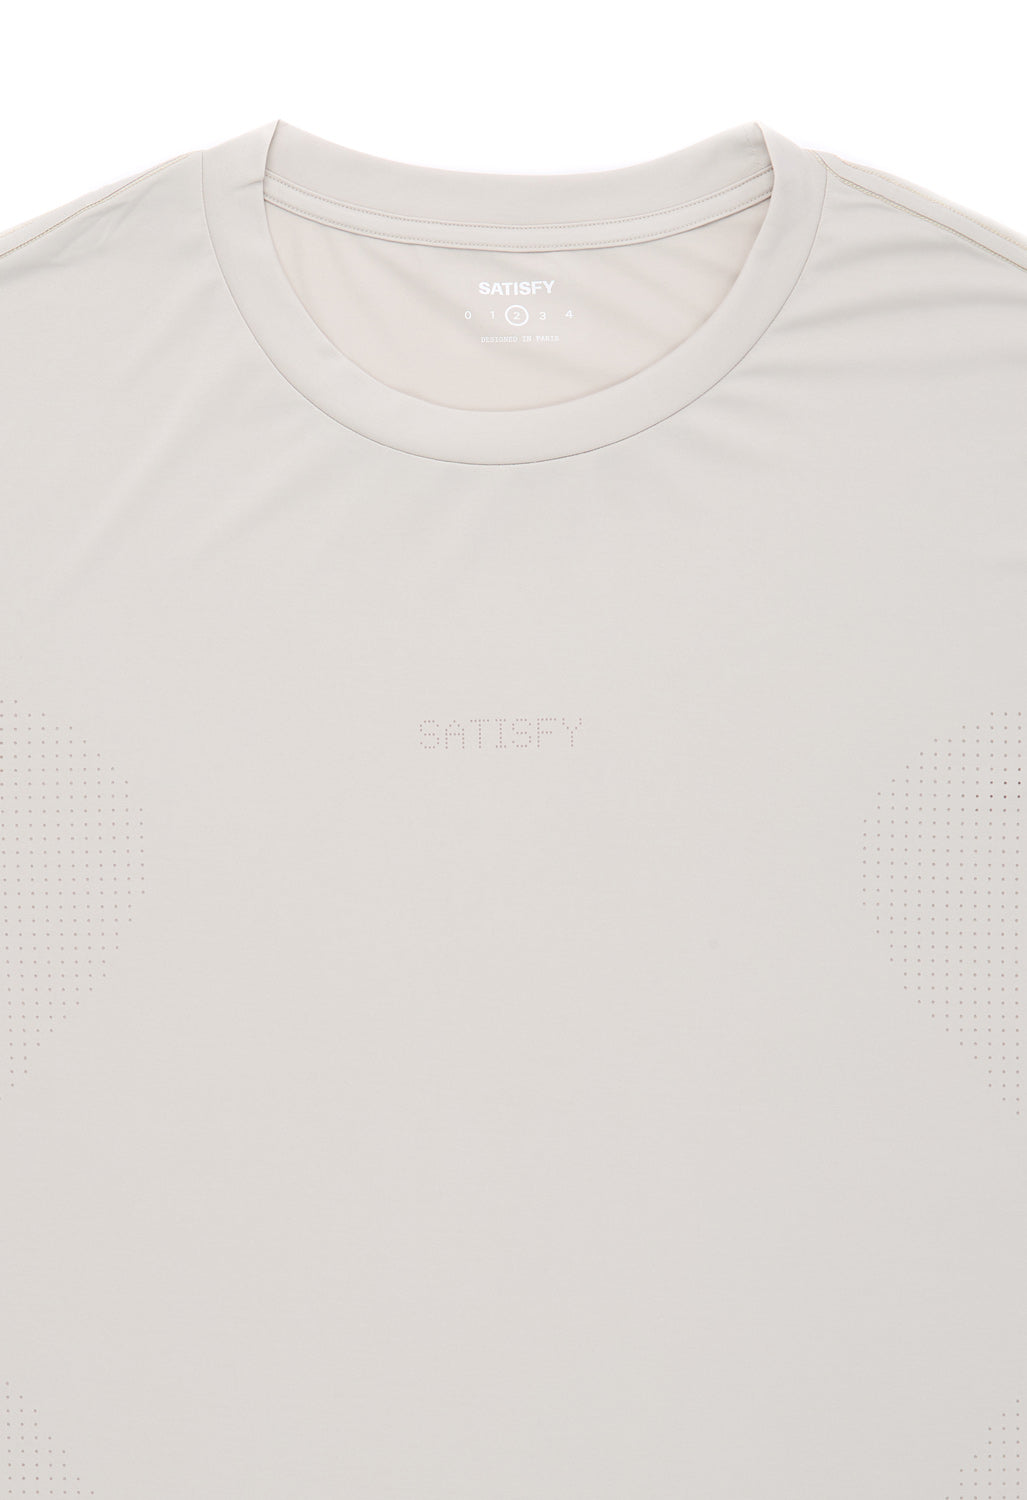 Satisfy Men's AuraLite Air T-Shirt - Mineral Dolomite